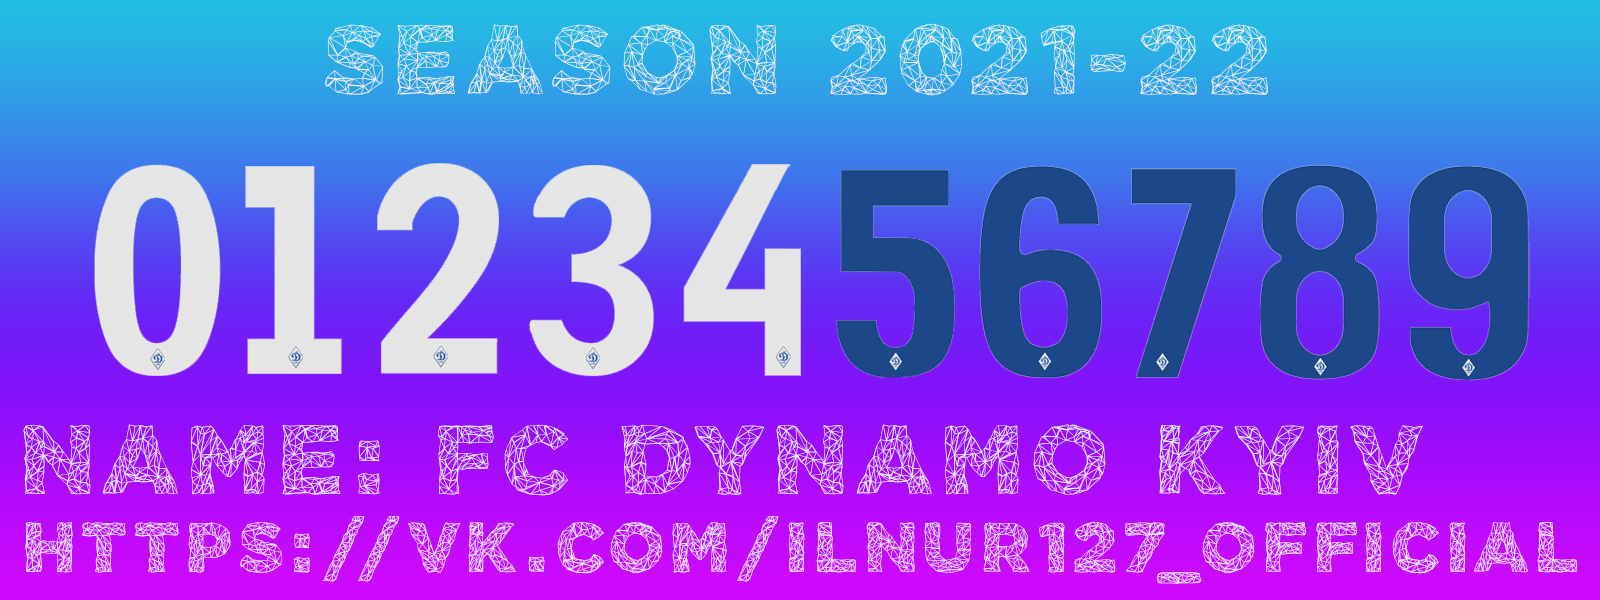 FC Dynamo Kyiv 2021-22 (kitnumbers).png